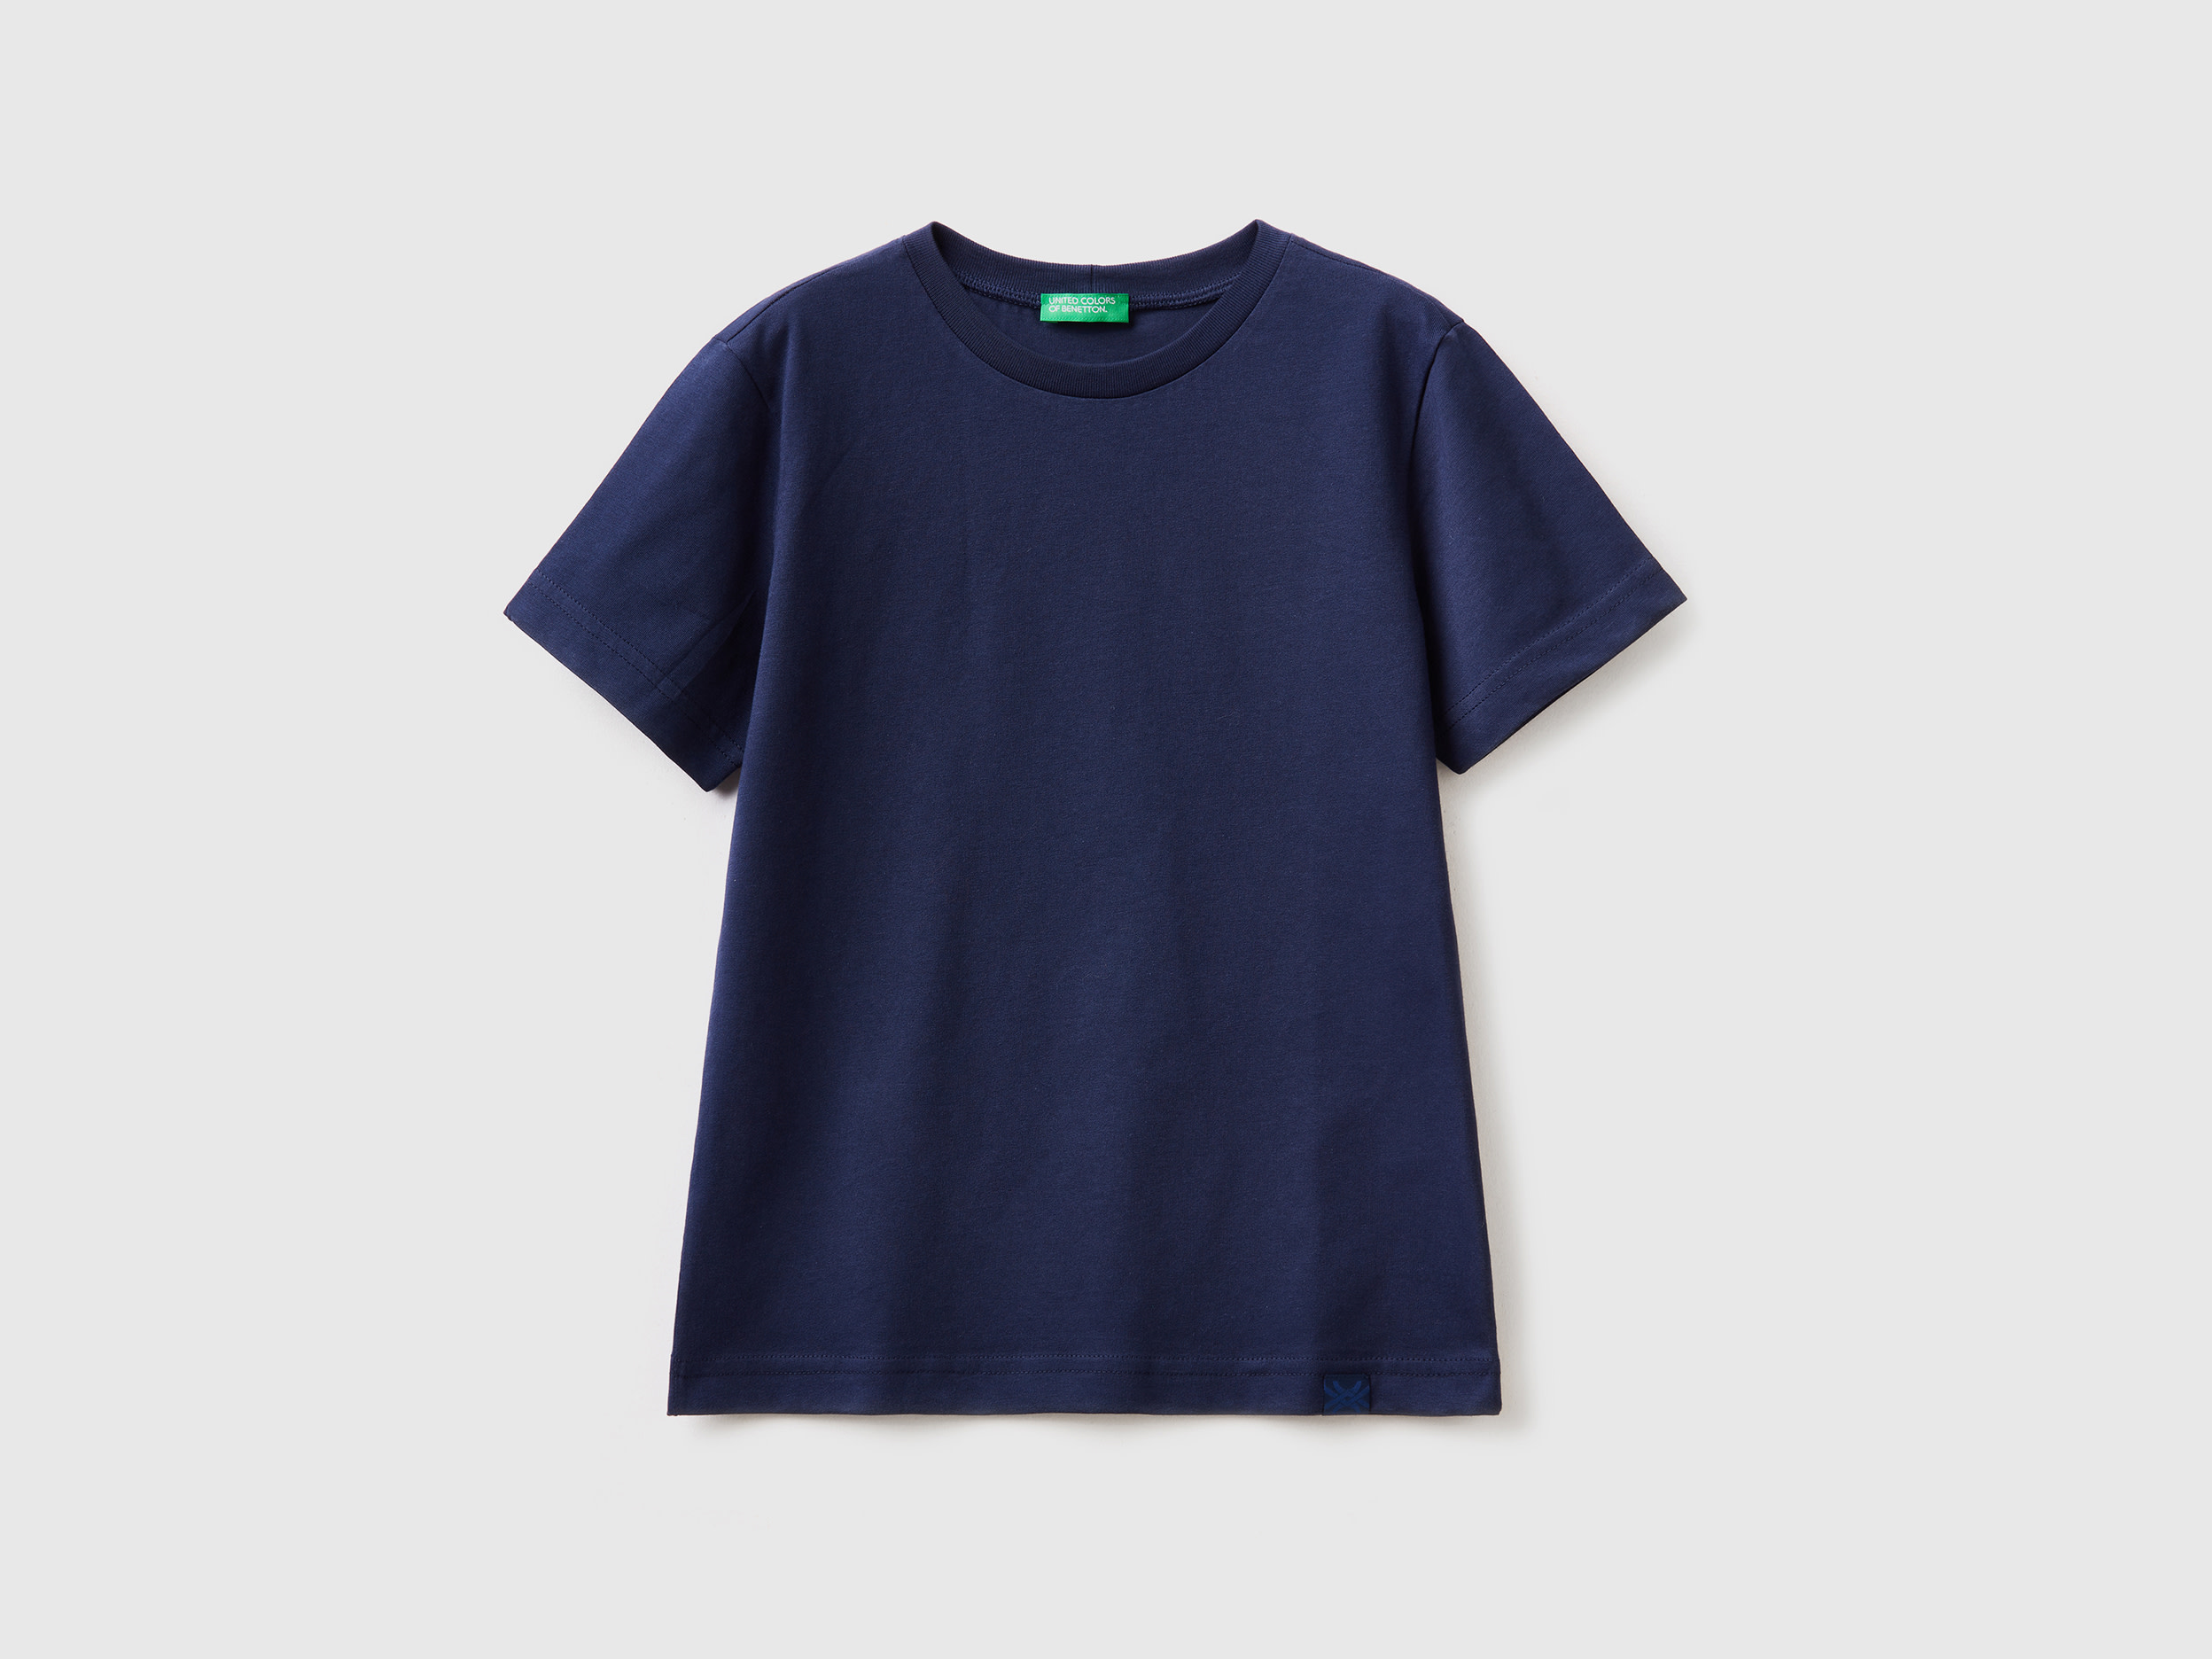 Benetton, Organic Cotton T-shirt, size 3XL, Dark Blue, Kids